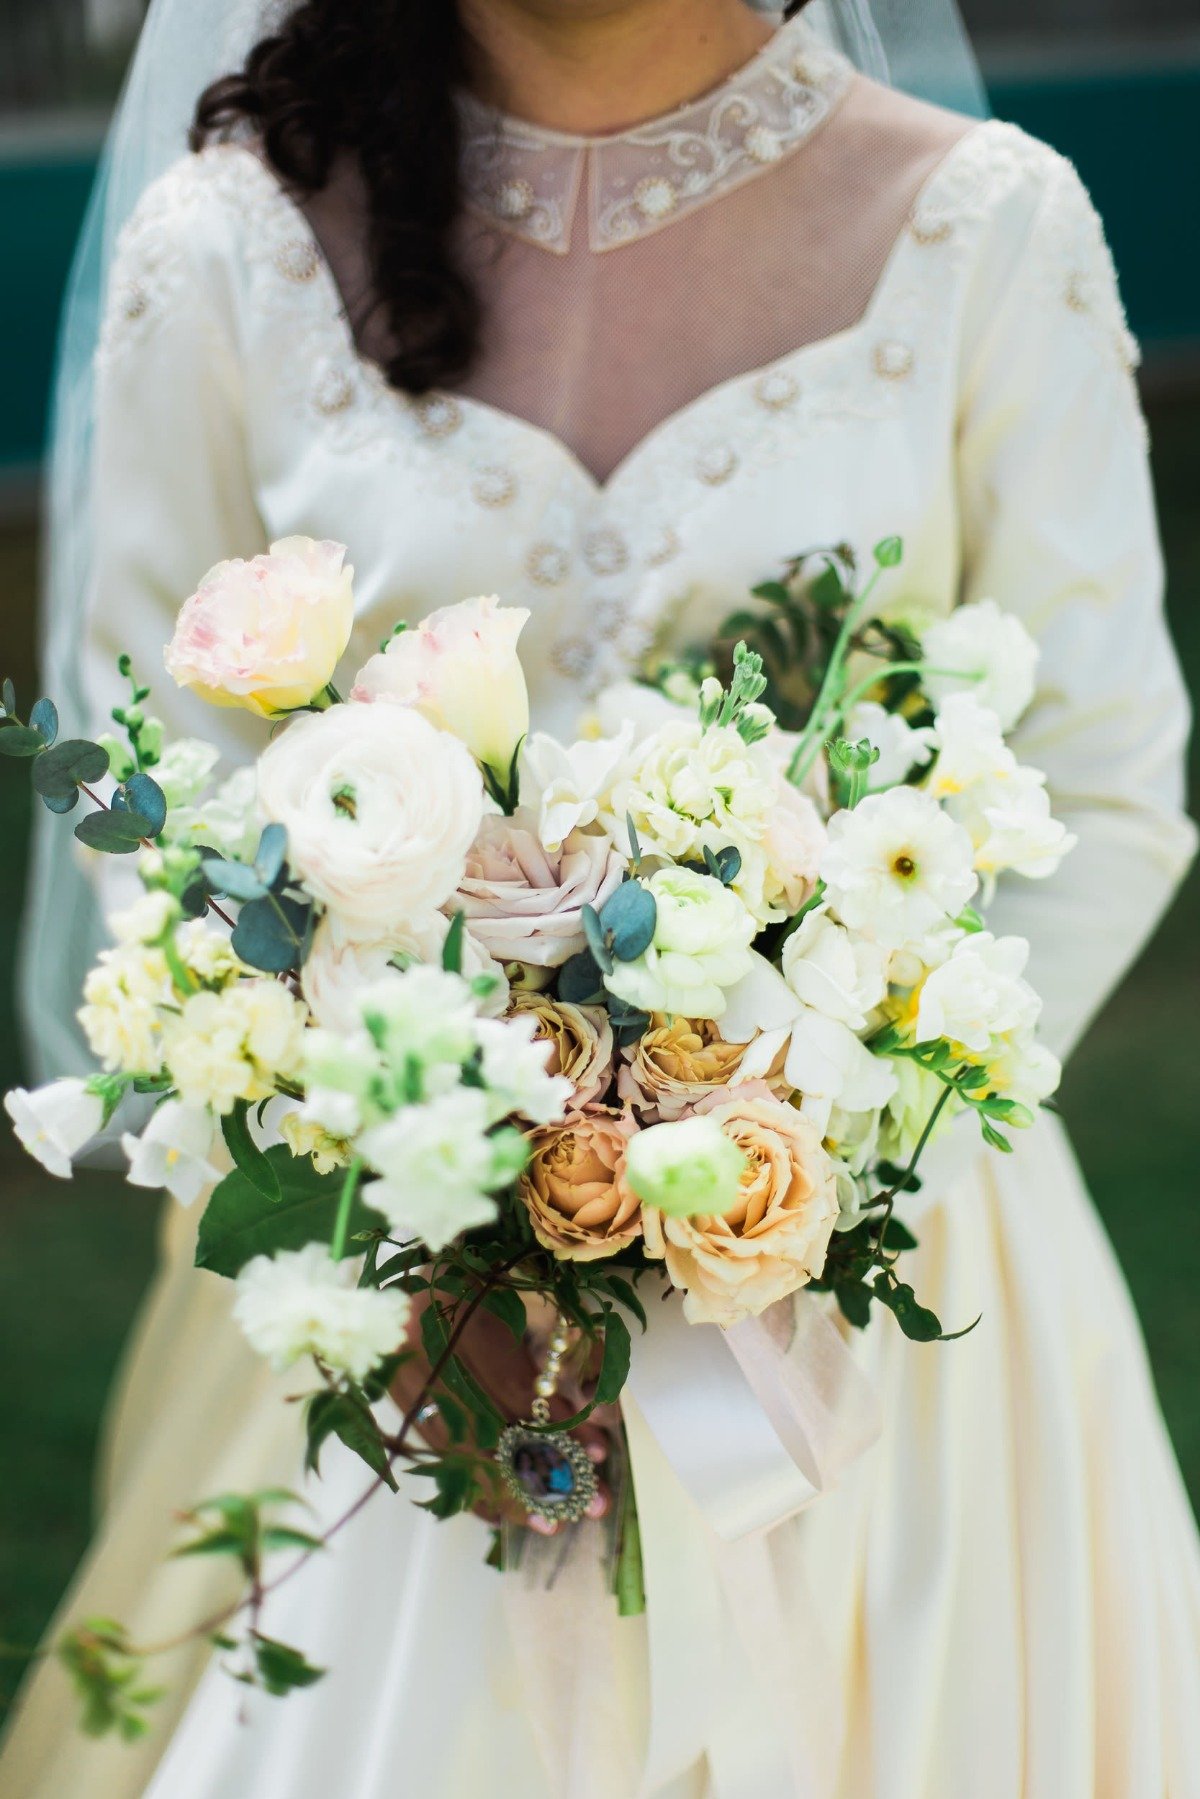 Italian inspired wedding bouquet designed by Sharon Floral Design Studio